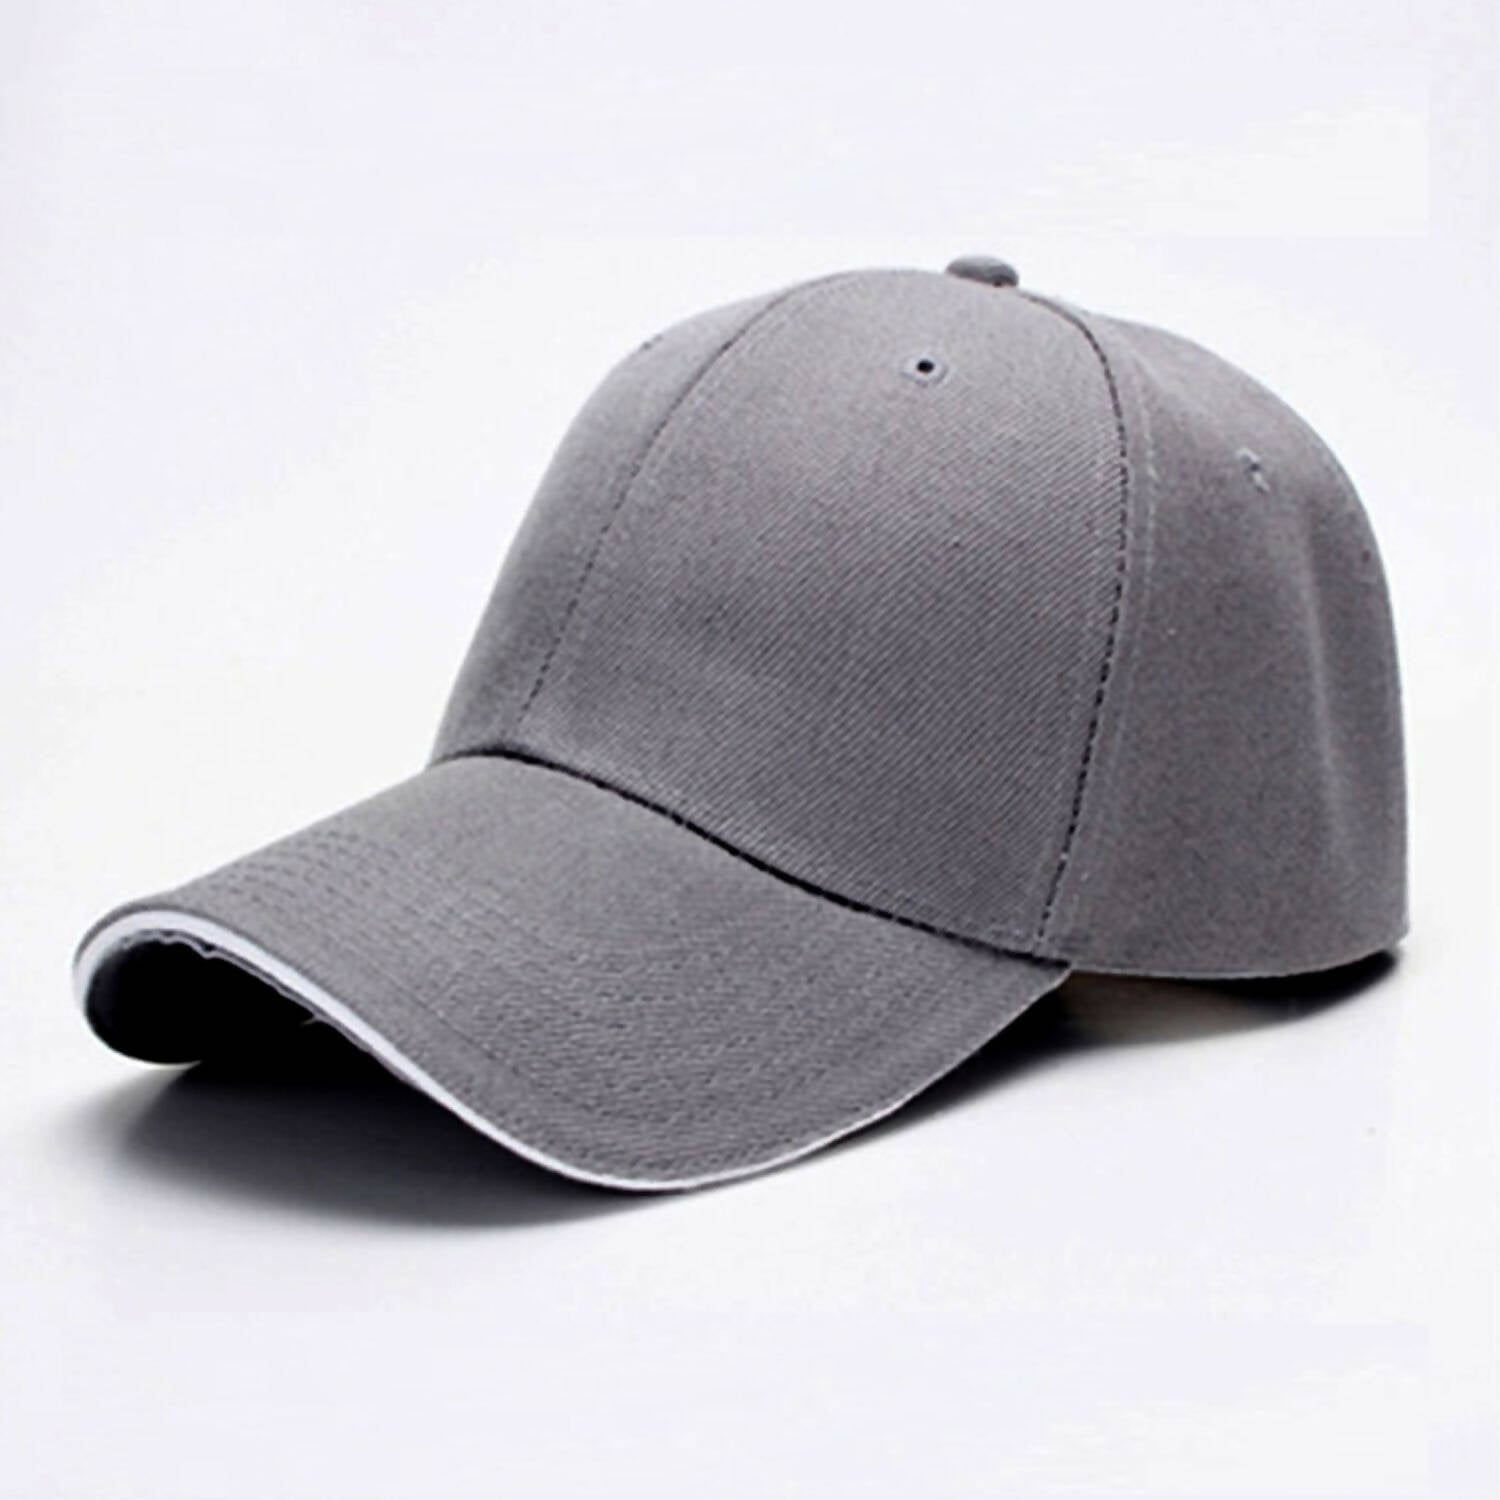 Grey Caps for Men Curved Brim and Adjustable Strap